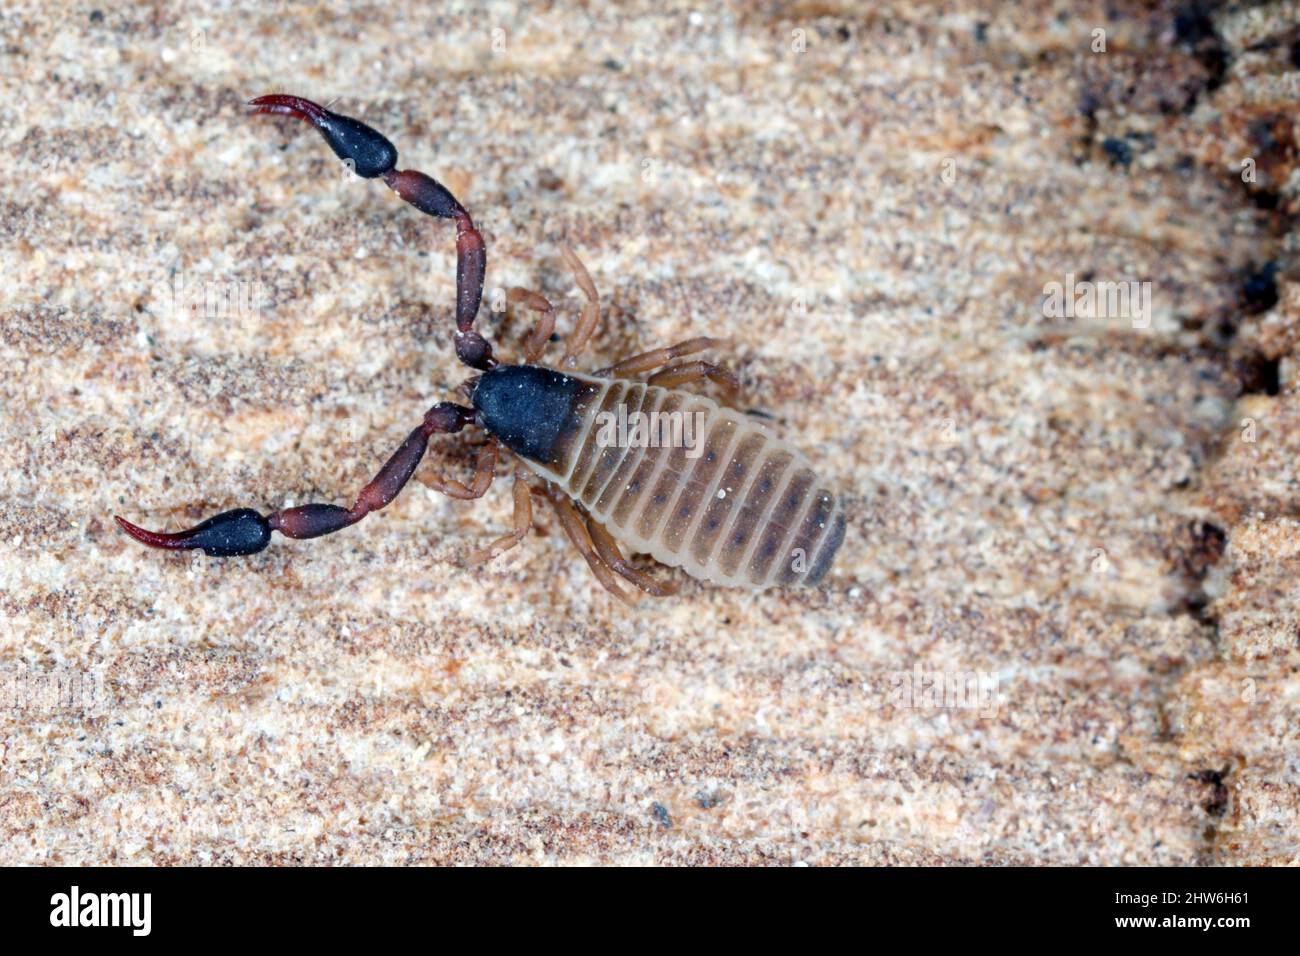 Super macro of Pseudoscorpion  also known as a false scorpion or book scorpion on tree bark. Stock Photo